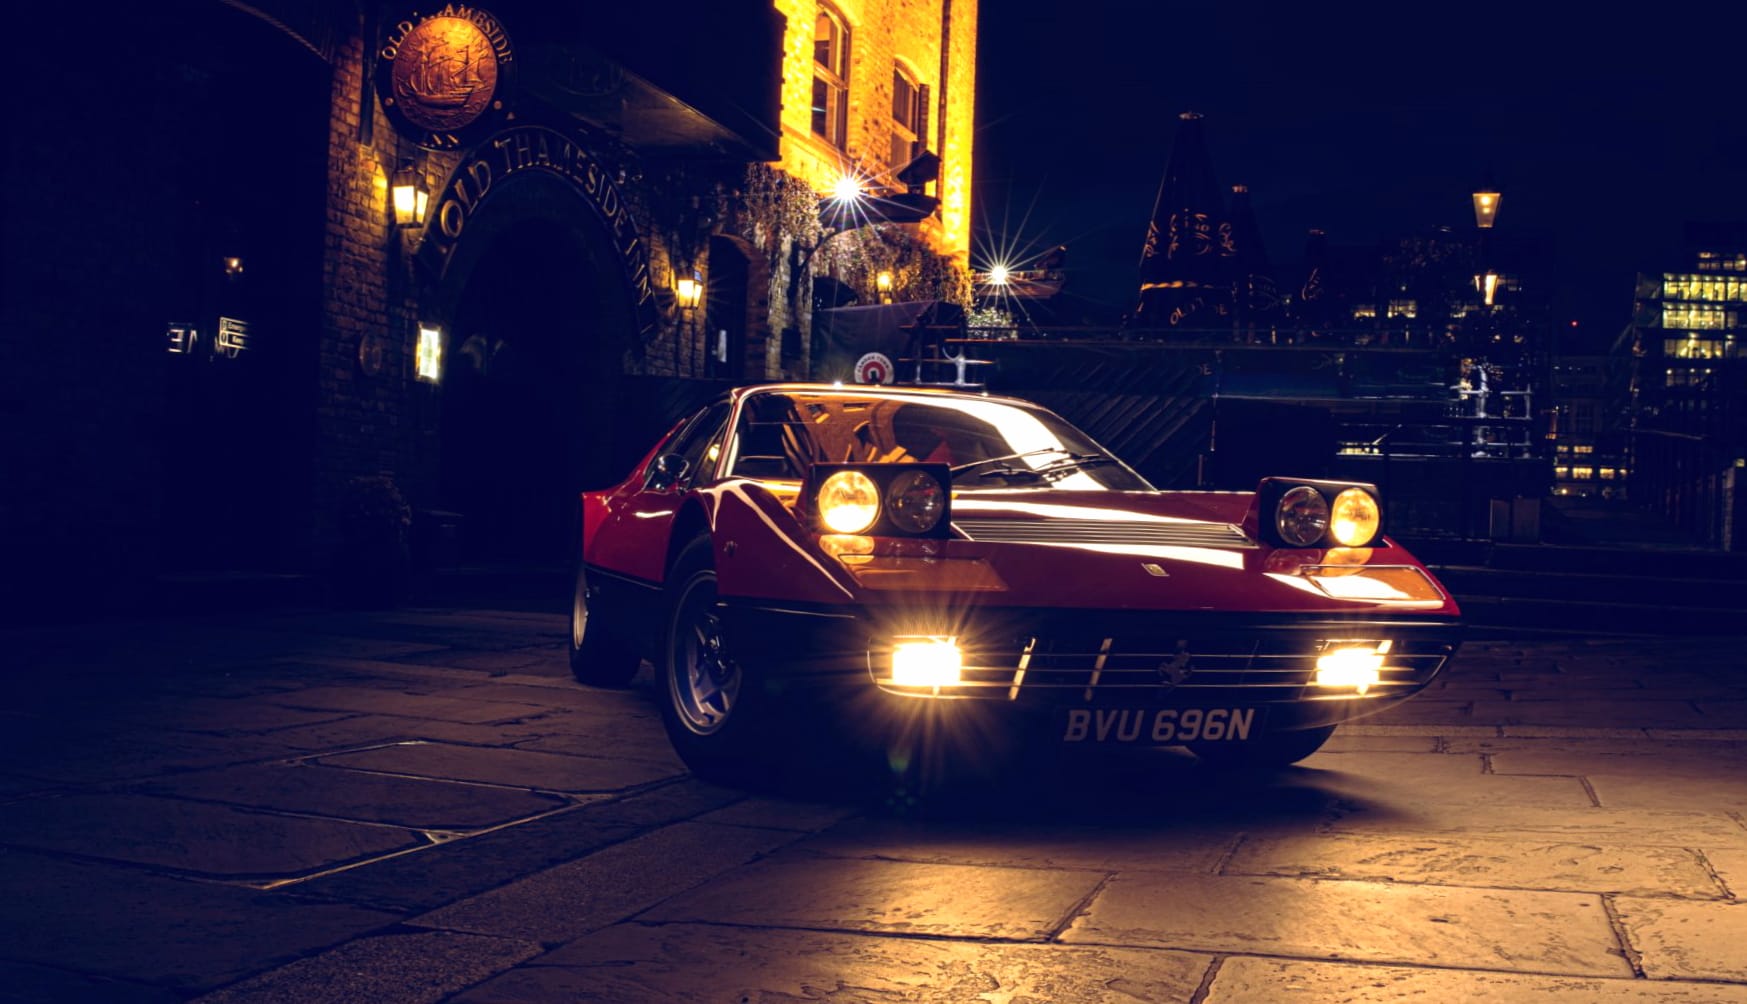 Ferrari Berlinetta Boxer wallpapers HD quality